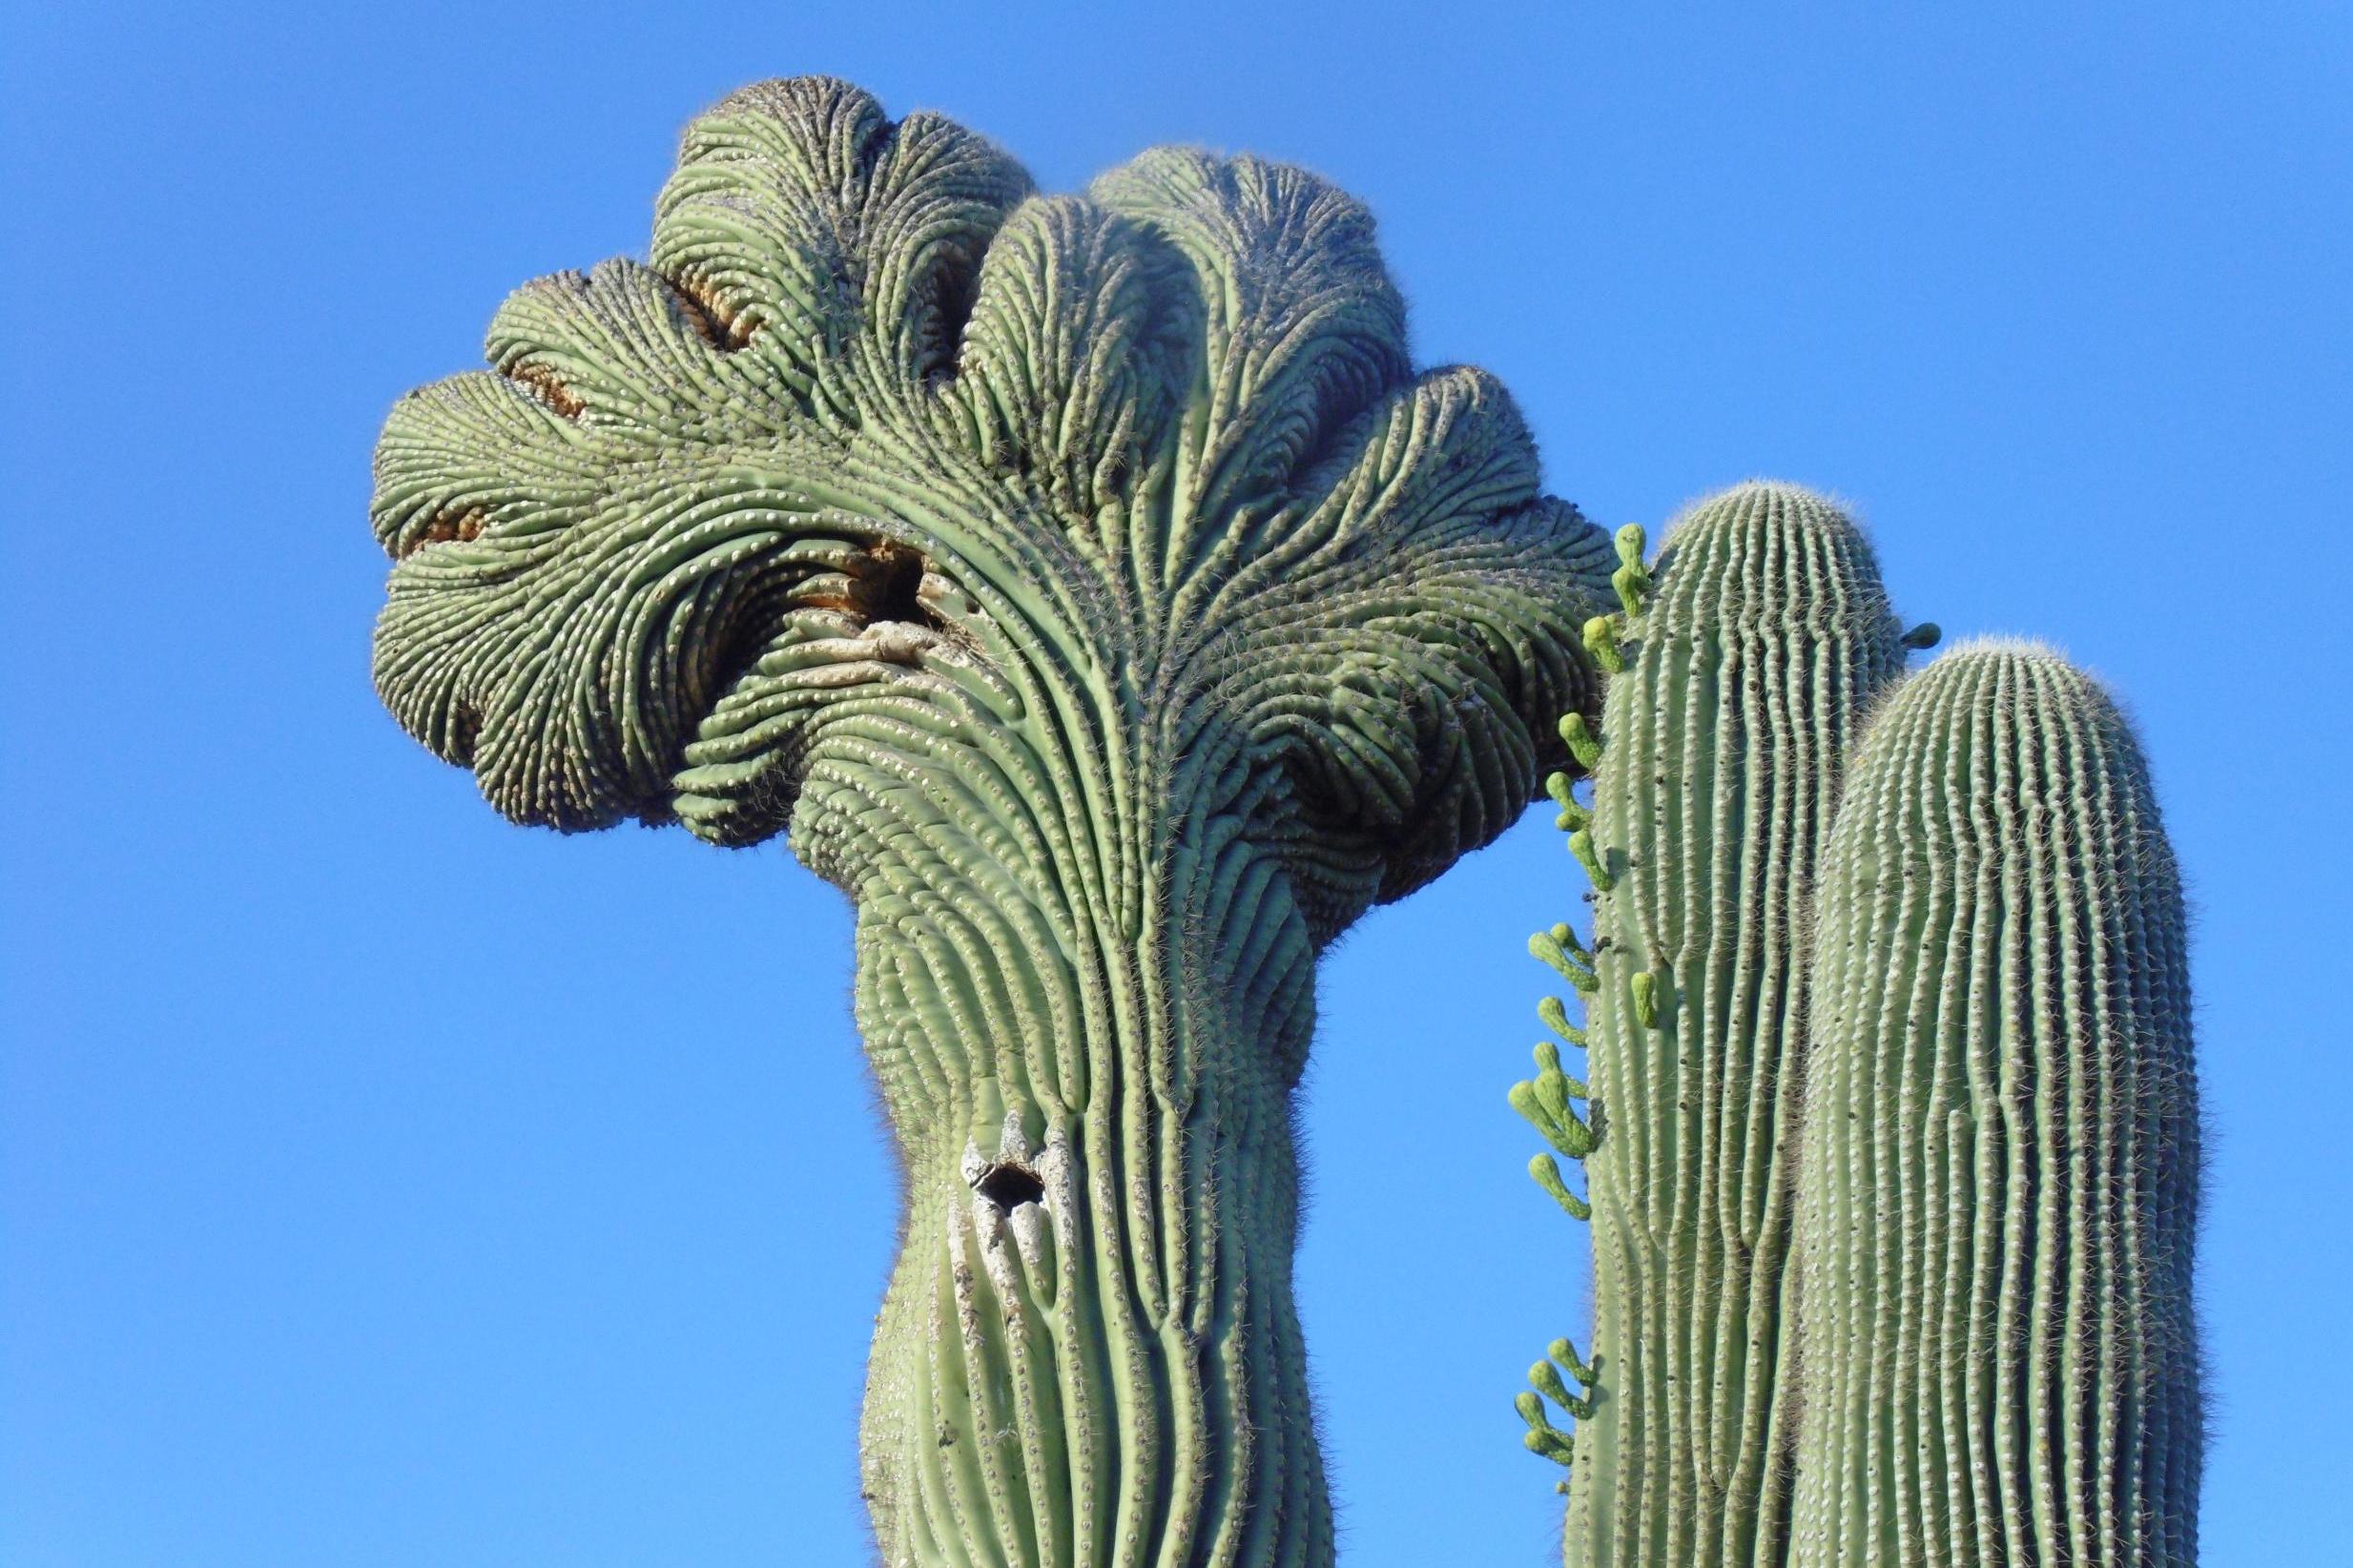 The cactus poachers of Phoenix who are ruining the Arizona desert ...